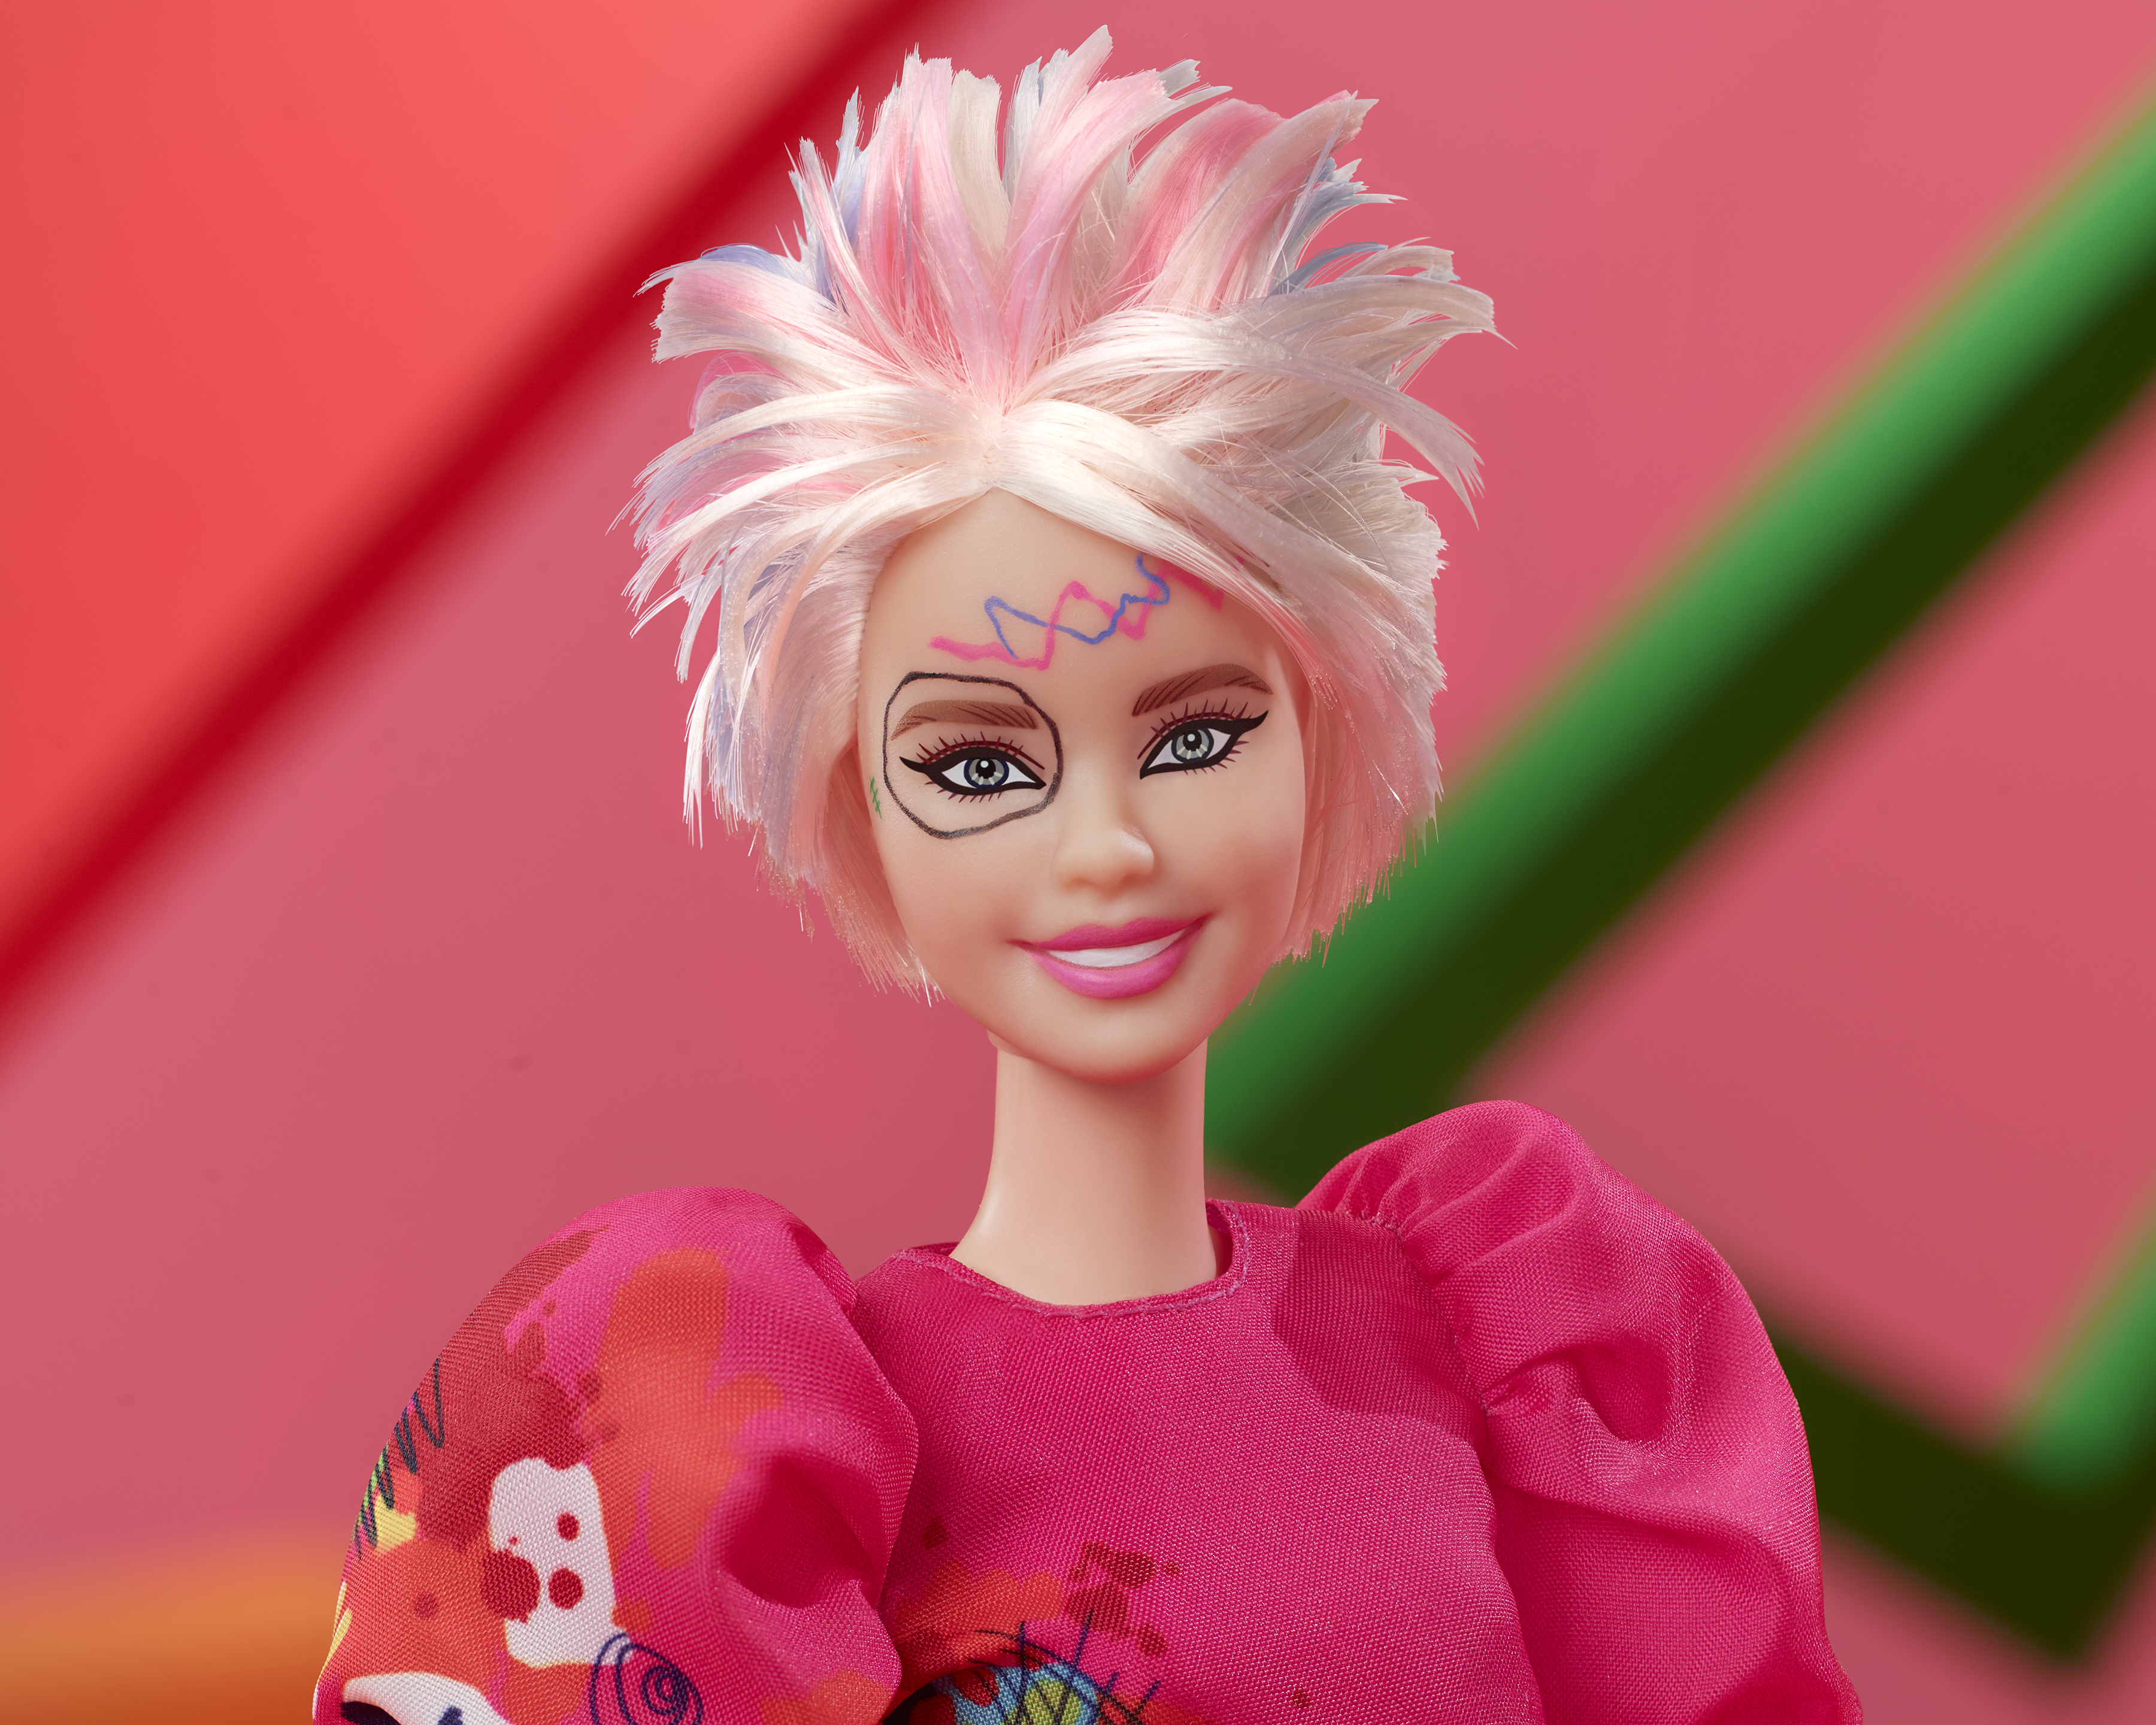 Preorder Mattel's Official Weird Barbie Doll | POPSUGAR Entertainment